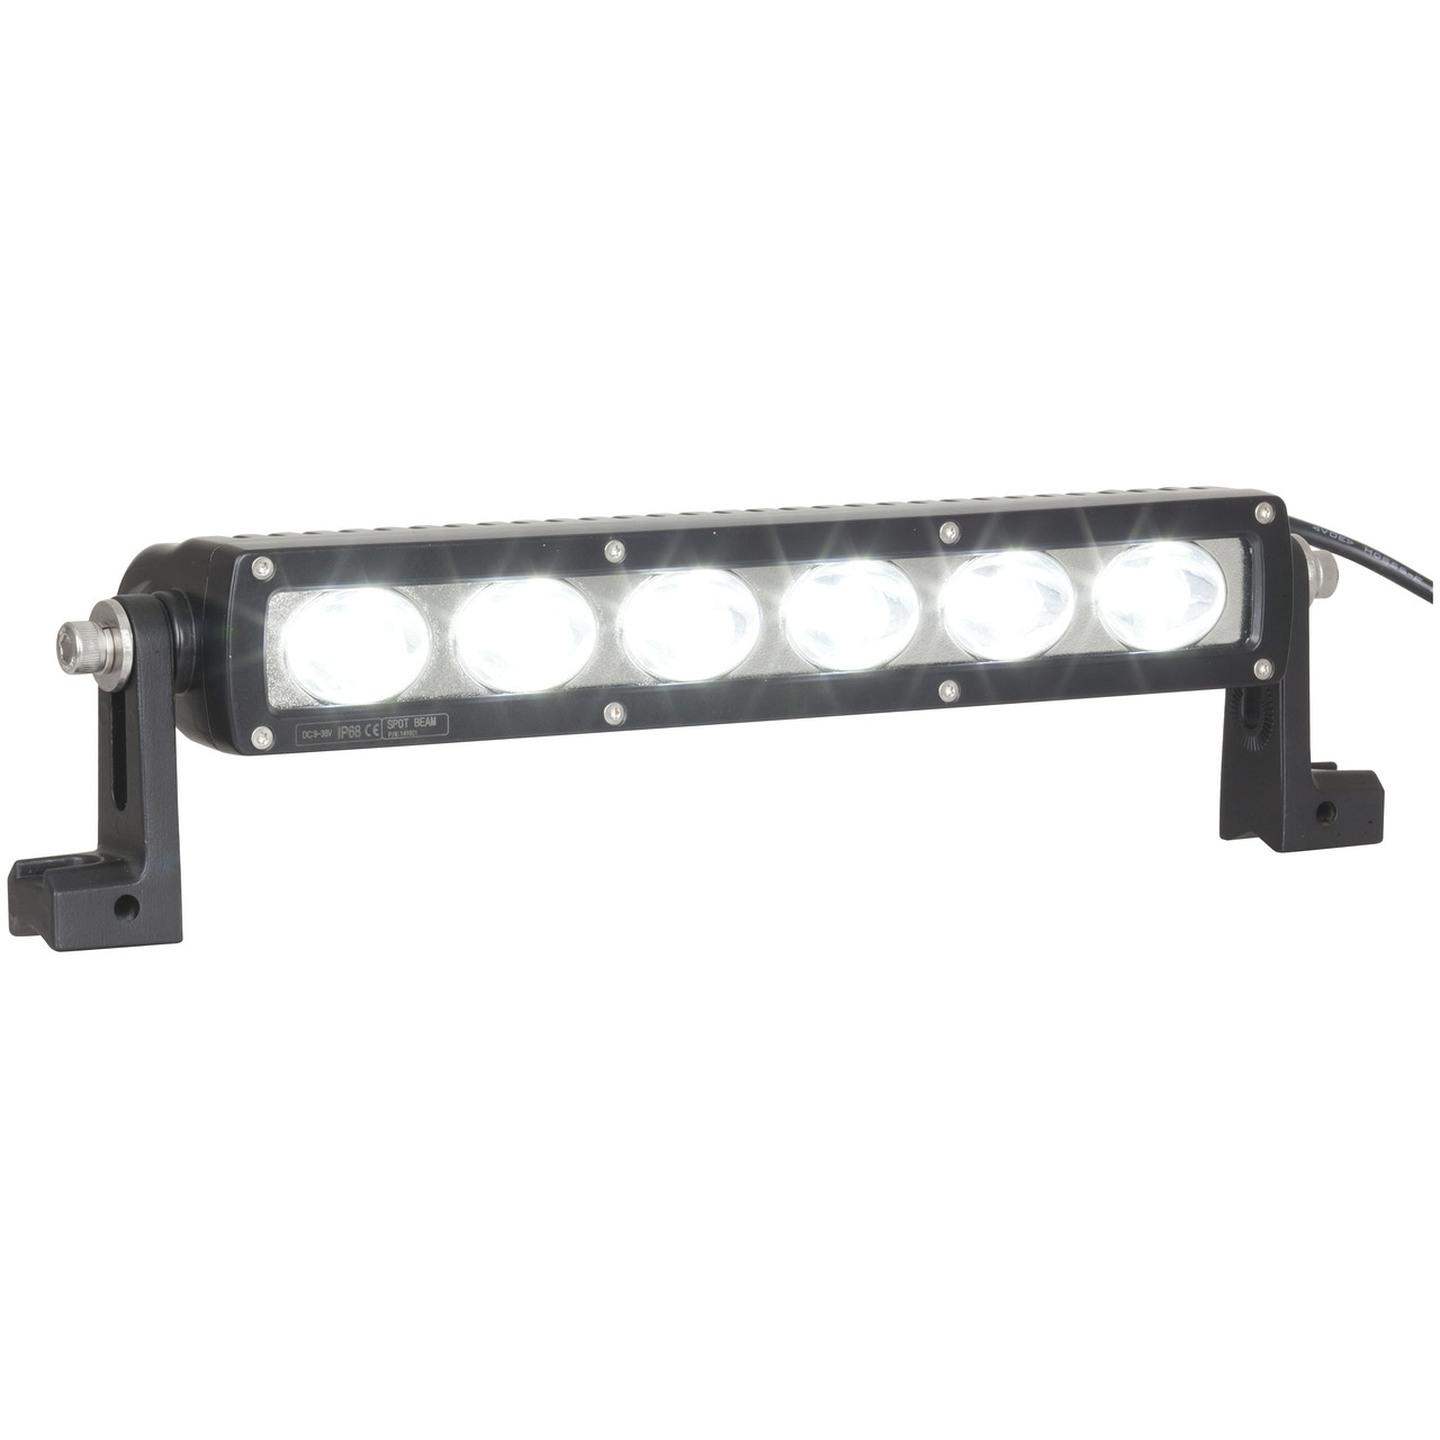 5400 Lumen IP68 12 Single Row Solid LED Light Bars